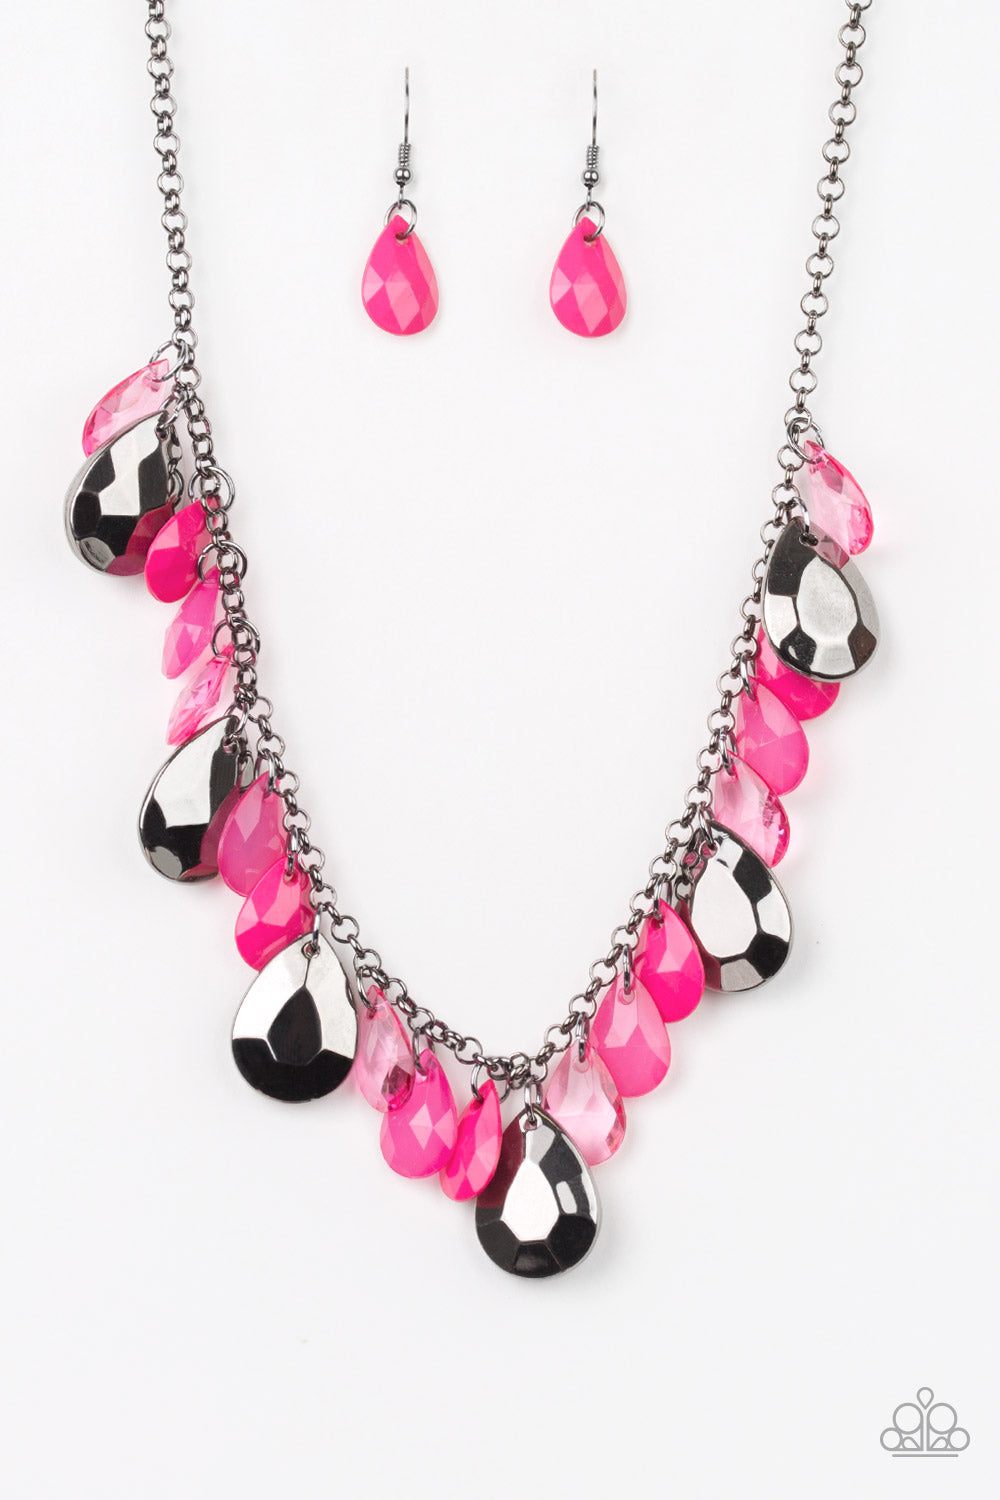 Hurricane Season Pink (Gunmetal) Necklace freeshipping - JewLz4u Gemstone Gallery